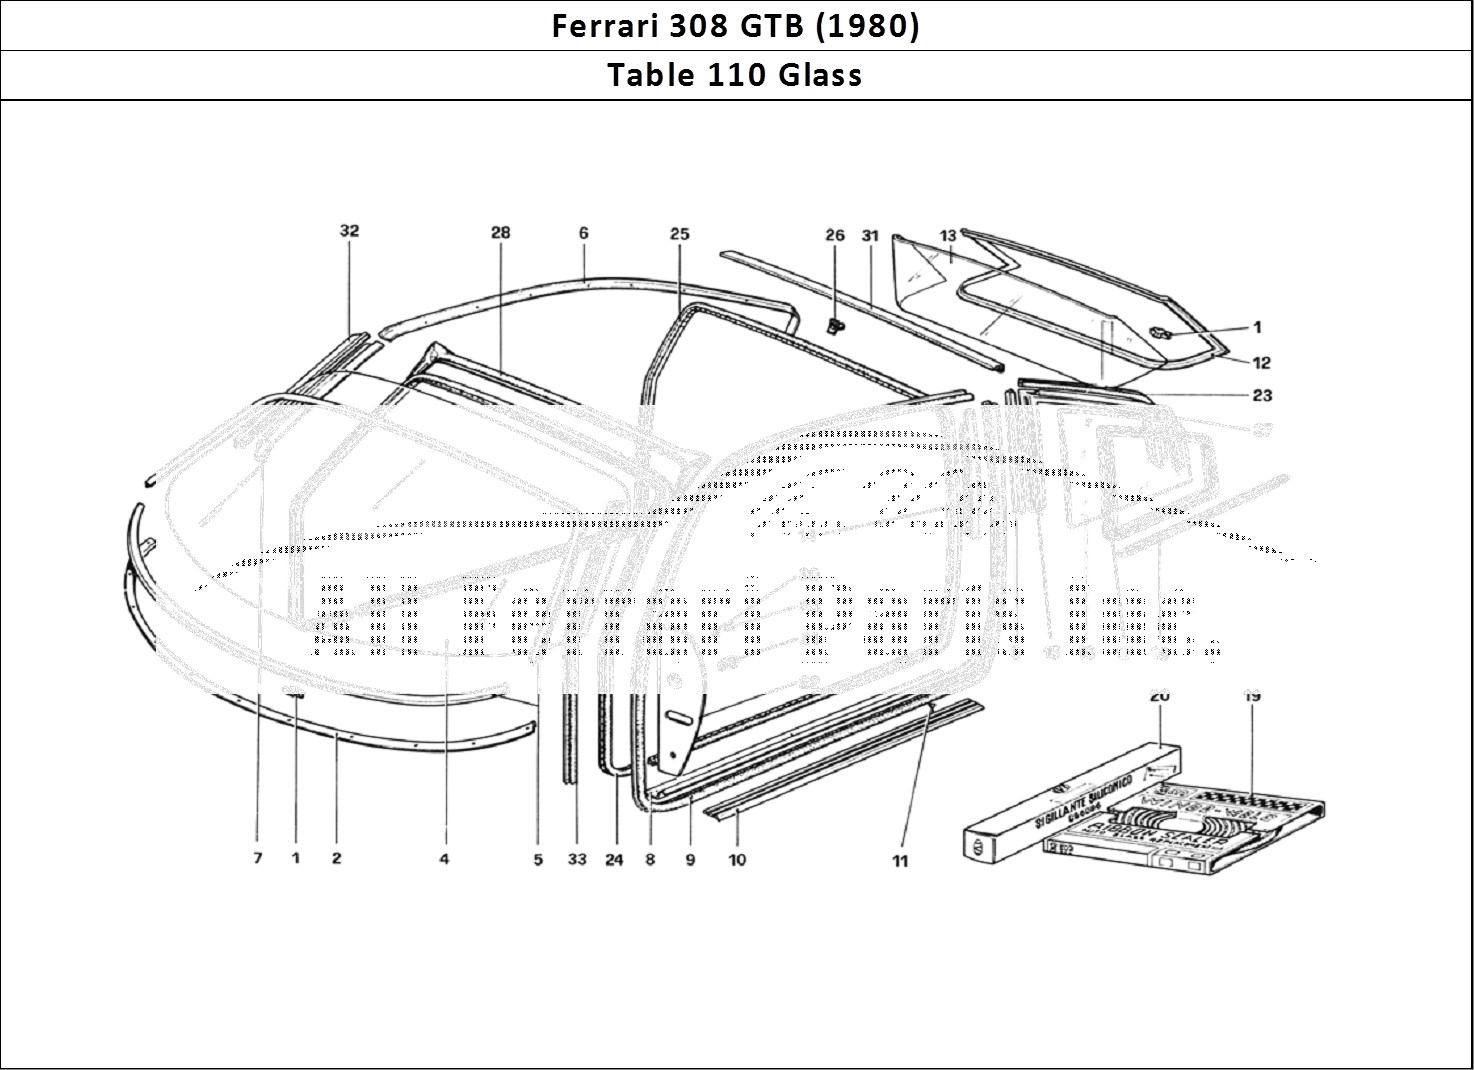 Ferrari Parts Ferrari 308 GTB (1980) Page 110 Glasses